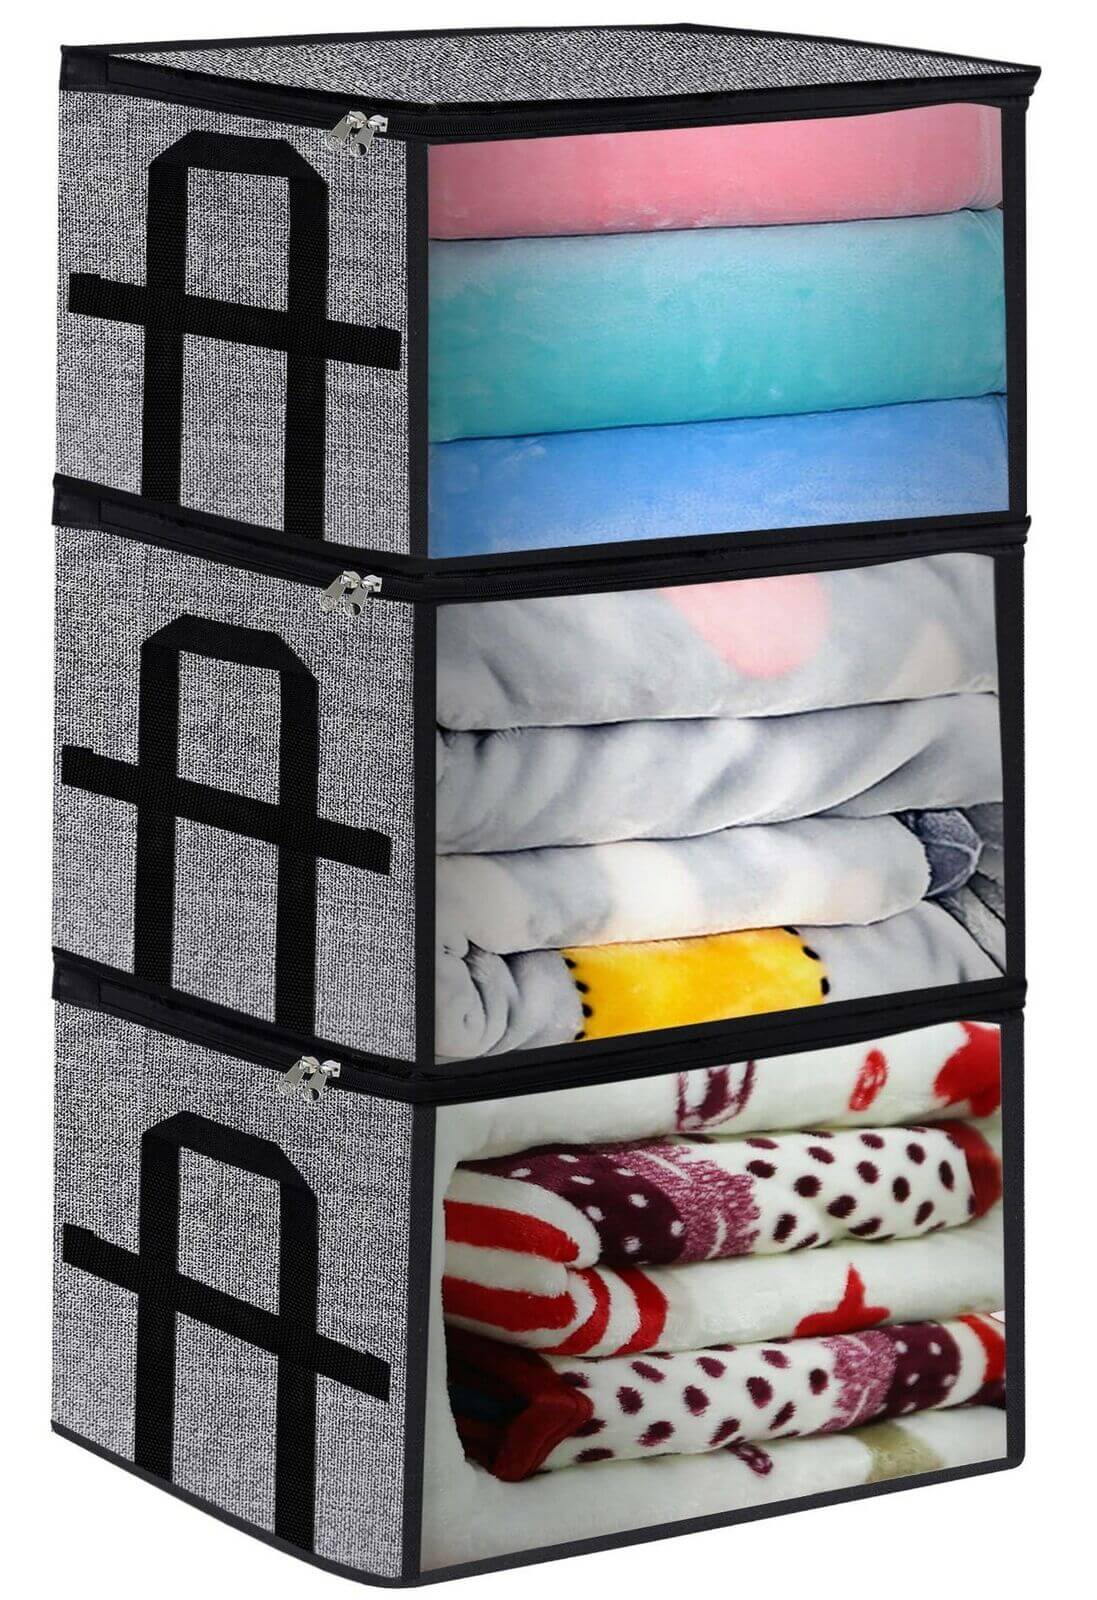 BlushBees® Wardrobe or Closet Organizer and Storage Drawer